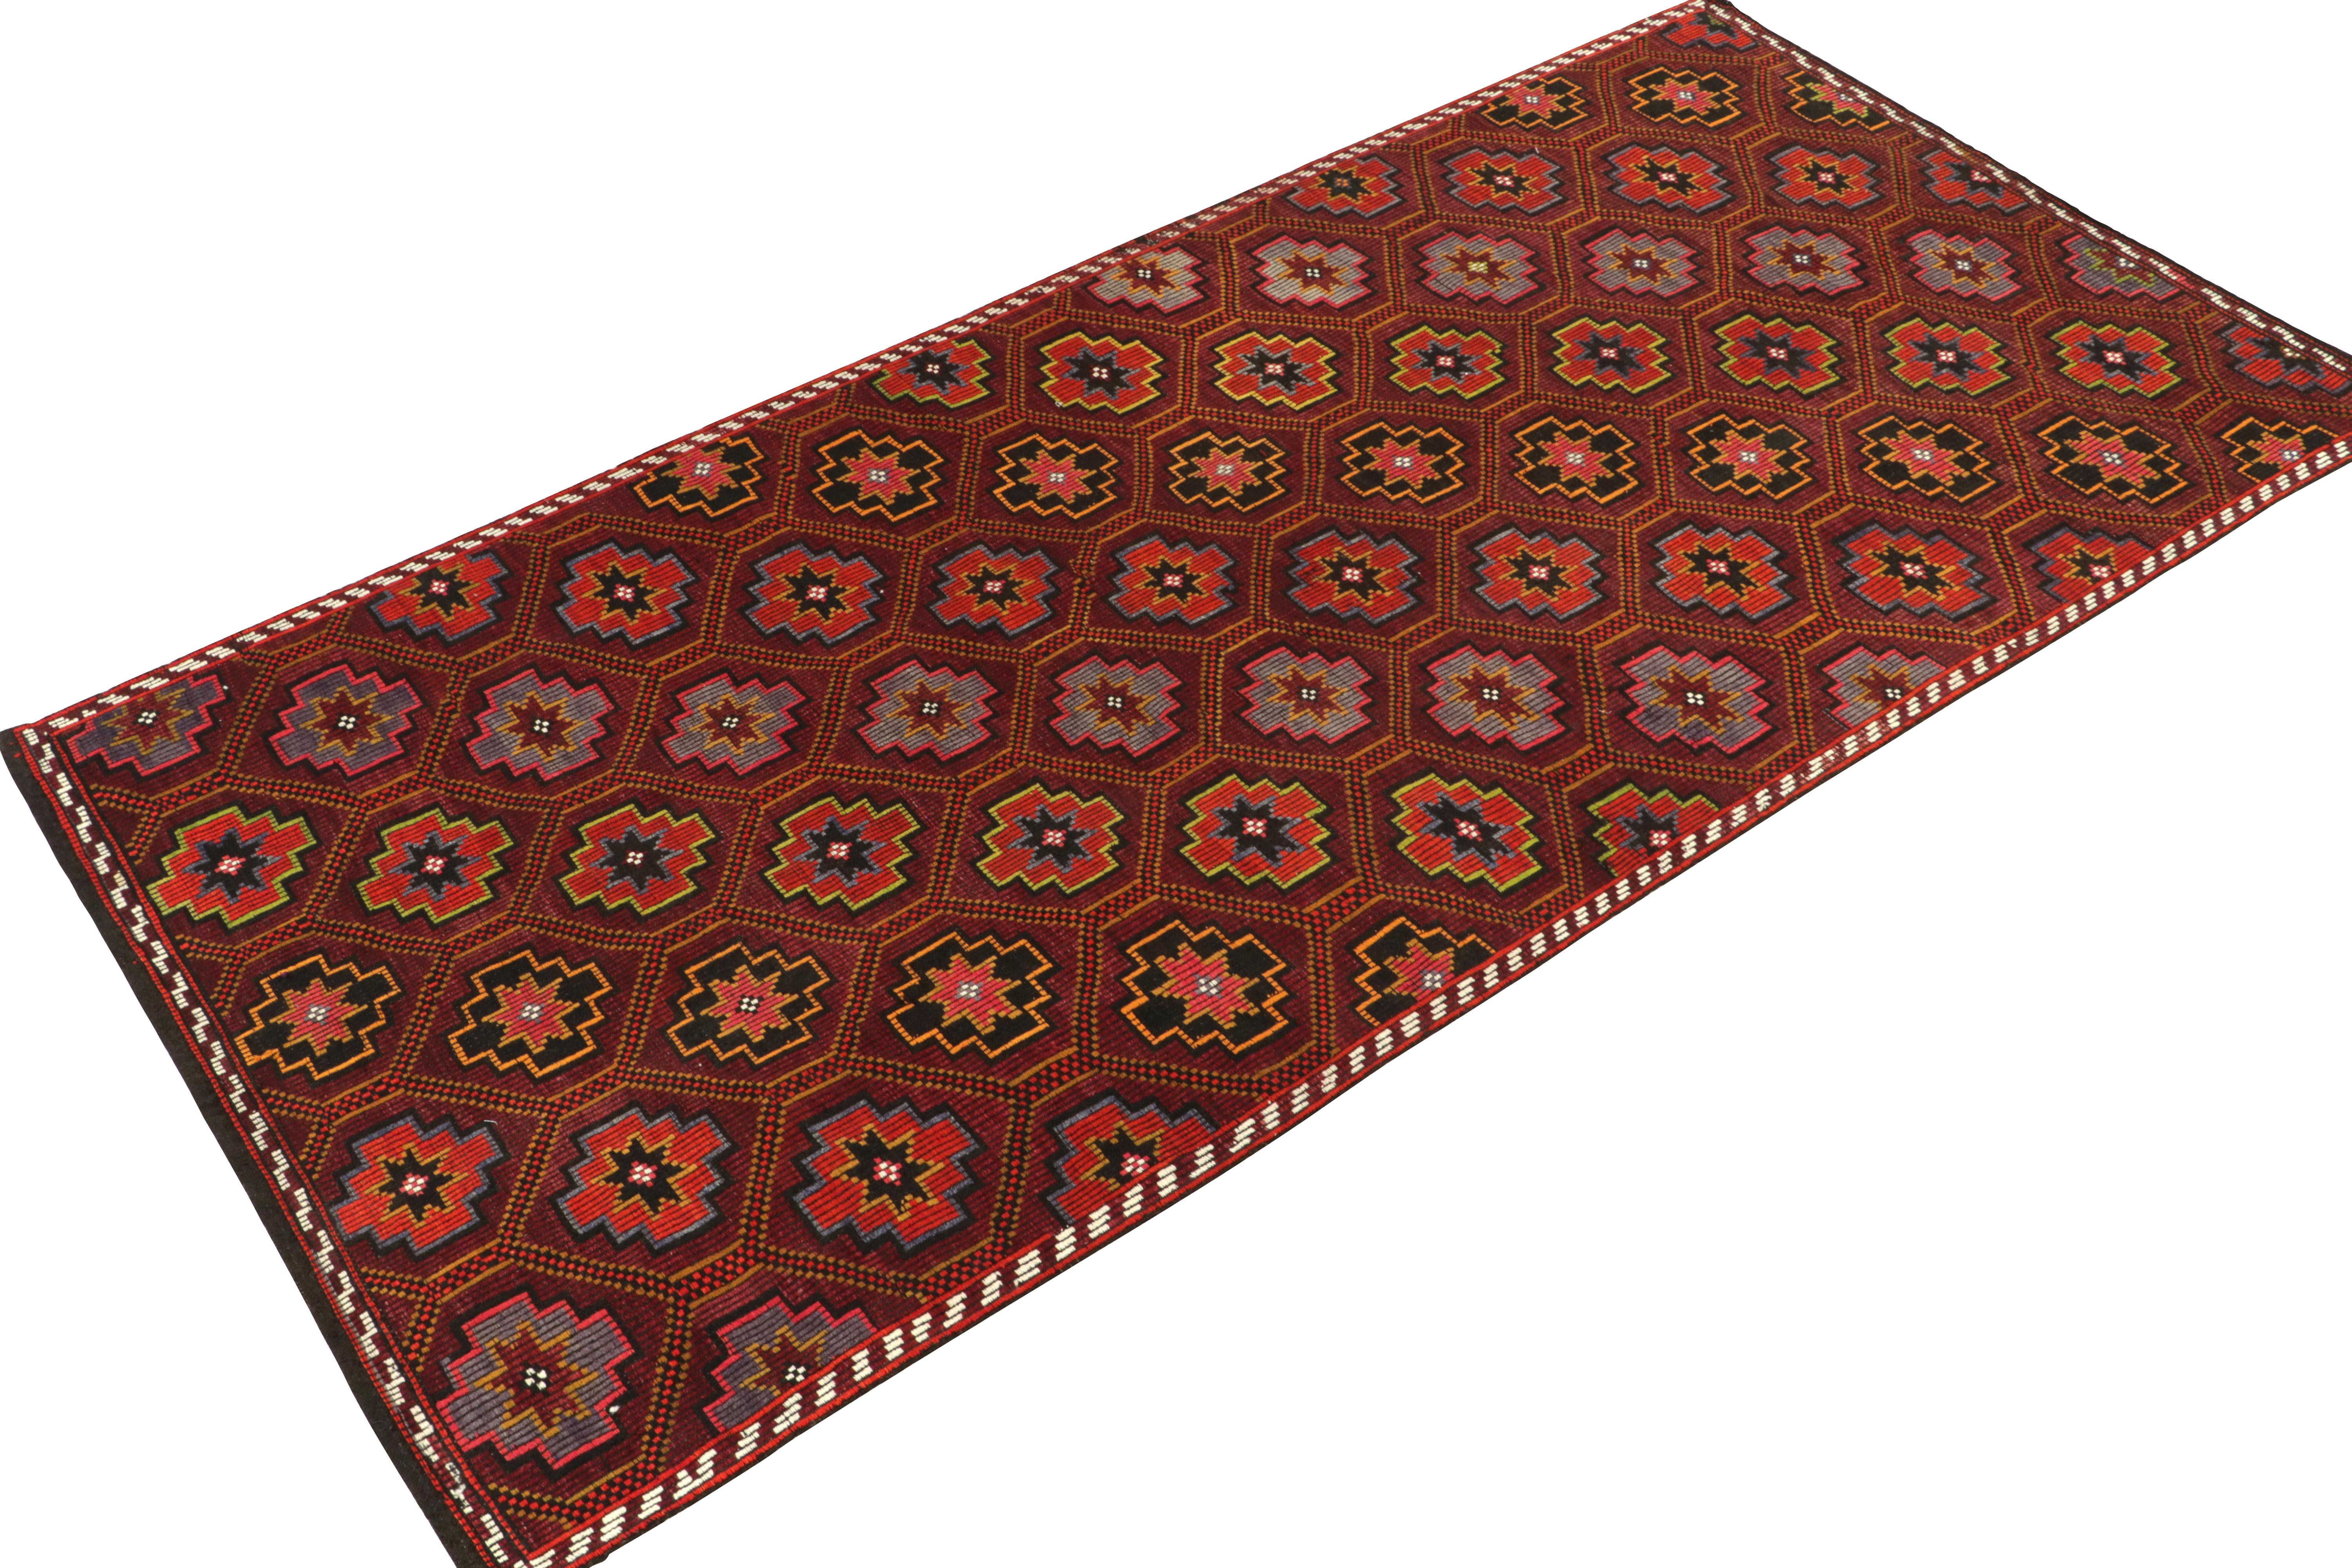 Turkish Vintage Chaput Kilim Rug in Red, Gold & Brown Geometric Patterns by Rug & Kilim For Sale